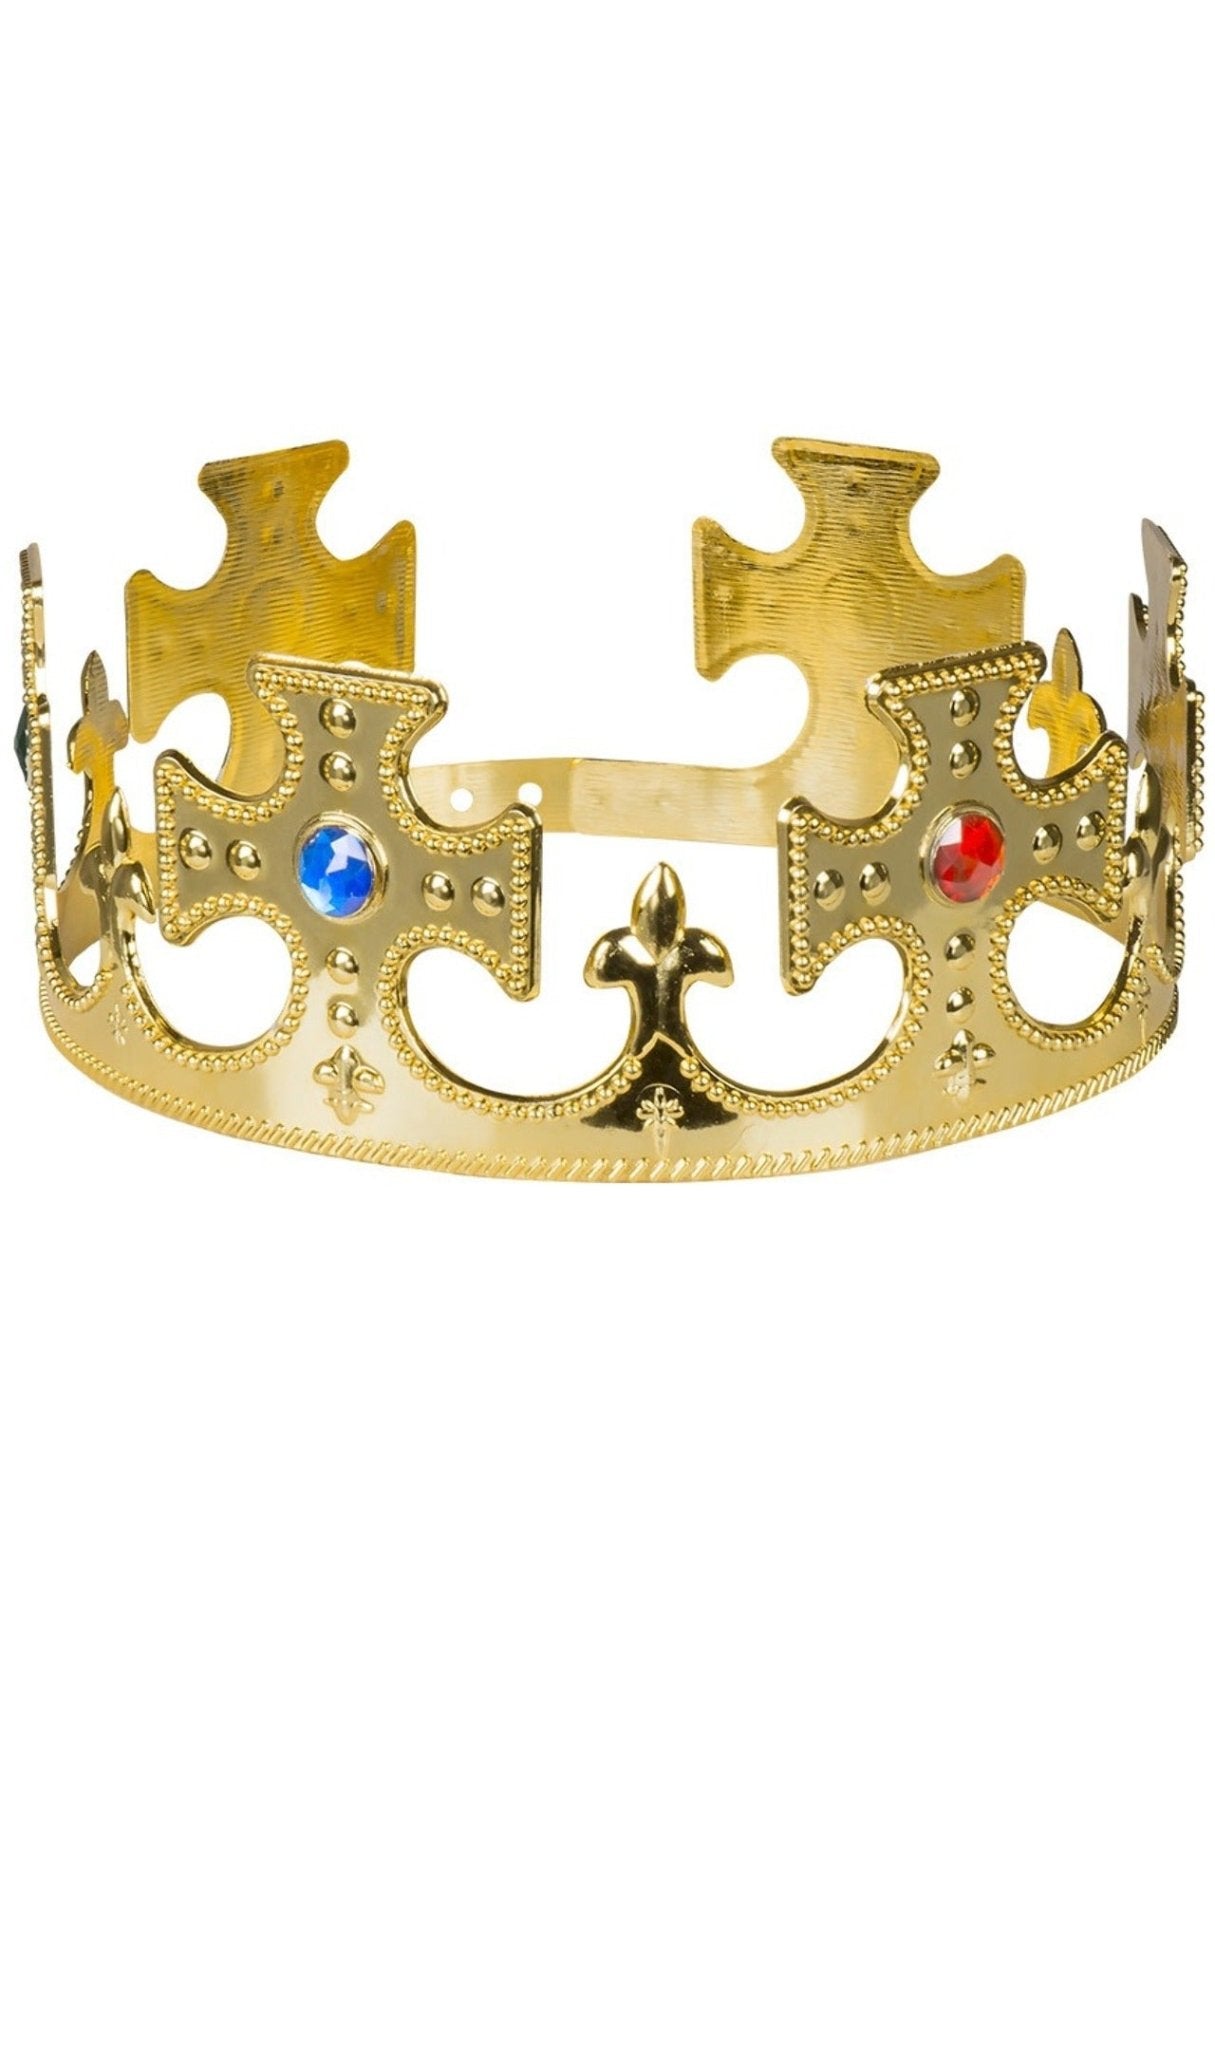 Corona Rey dorada ajustable